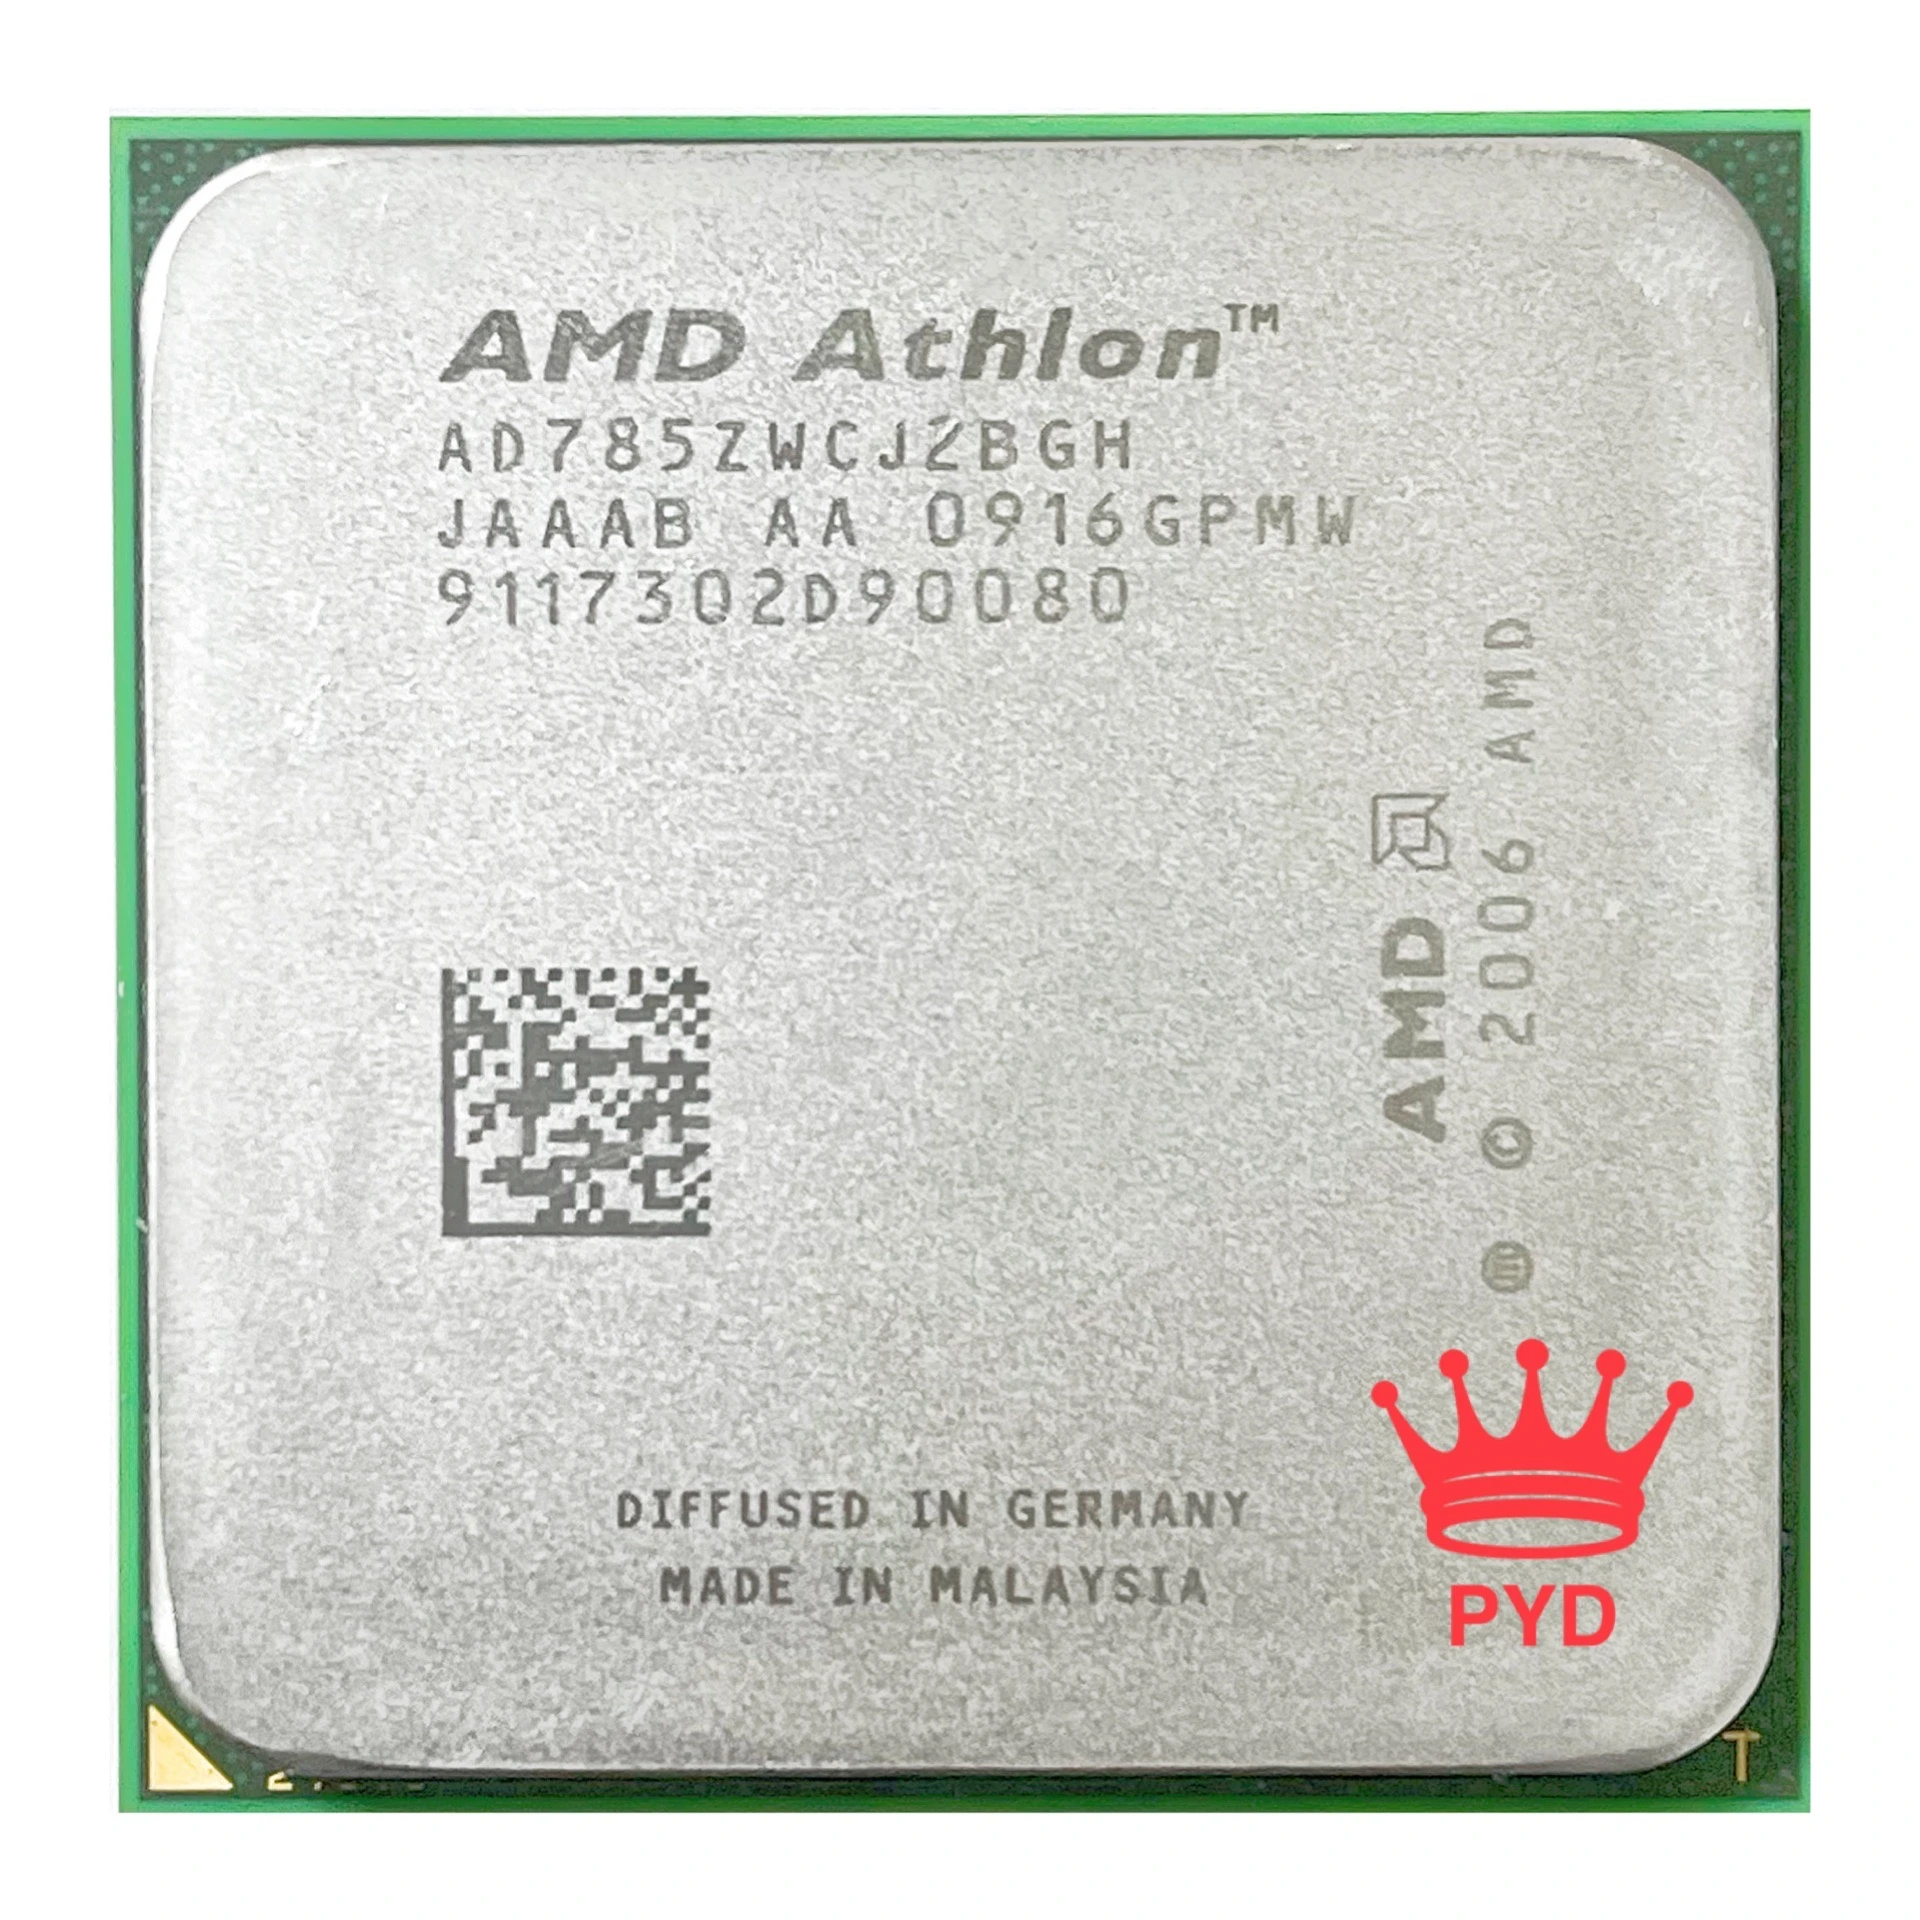 AMD Athlon X2 7850 2.8 GHz Dual-Core CPU Processor AD785ZWCJ2BGH Socket AM2+ good cpu